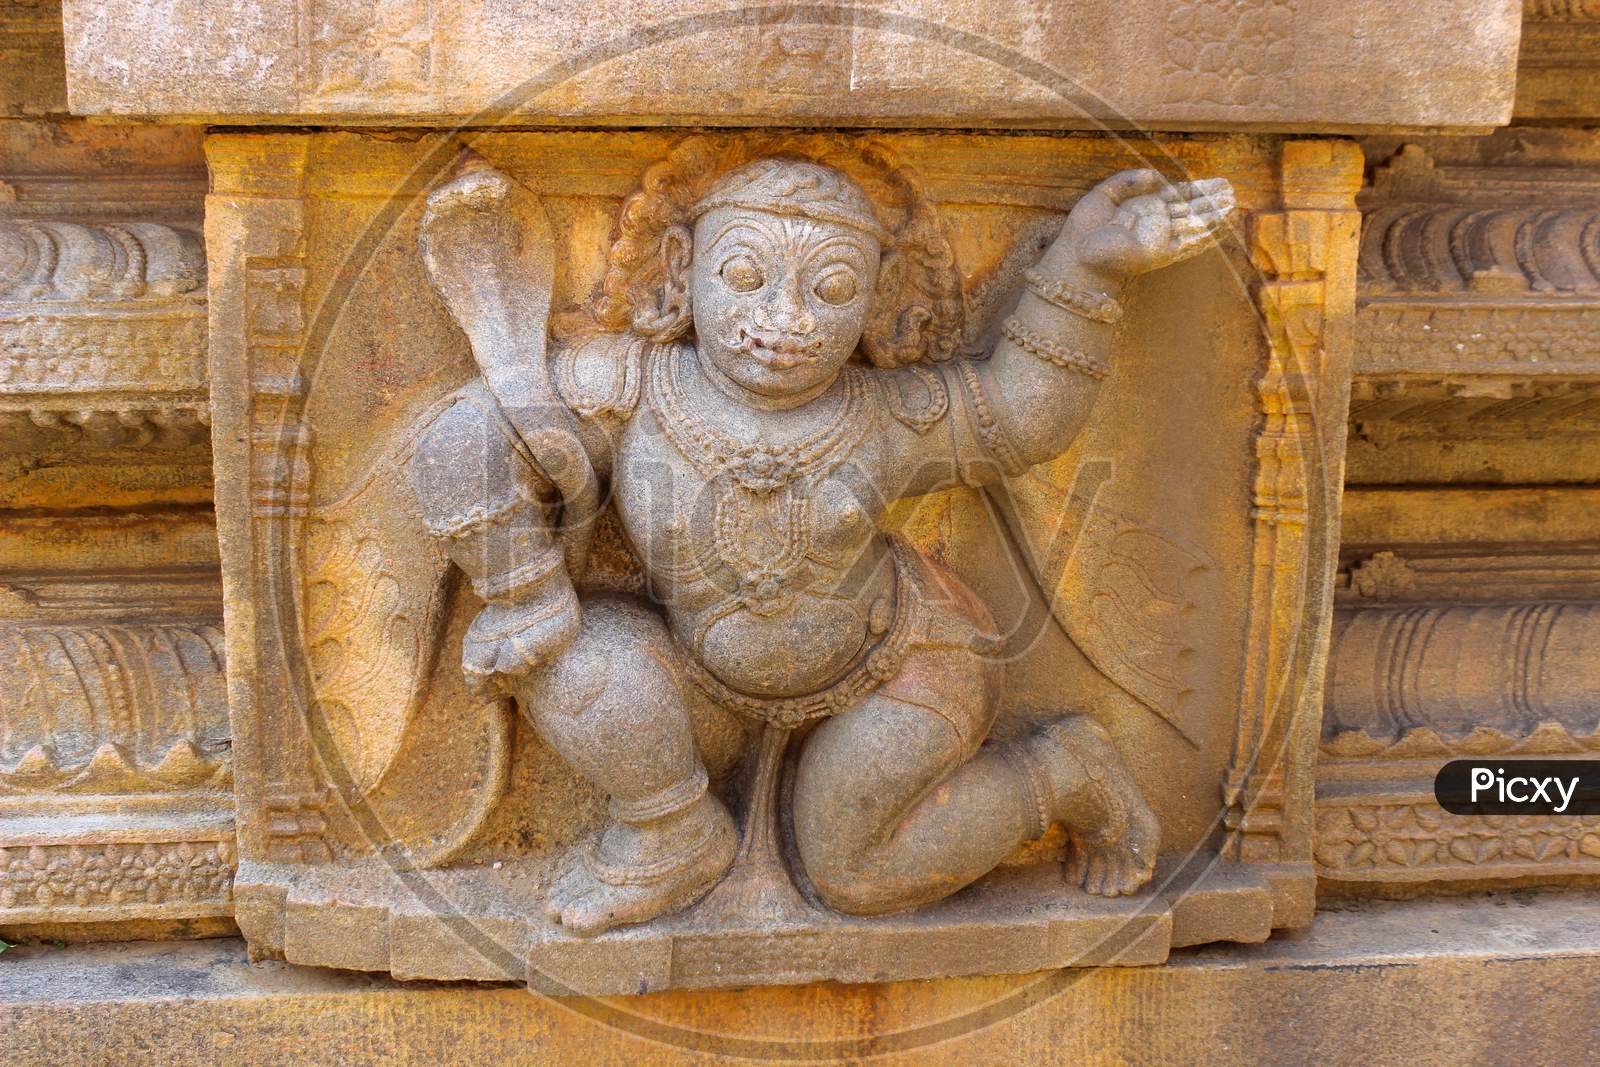 A beautiful Stone Carving of a Deity on a Pillar of a Hindu Temple at Melukote town near Mysuru in Karnataka state of India.